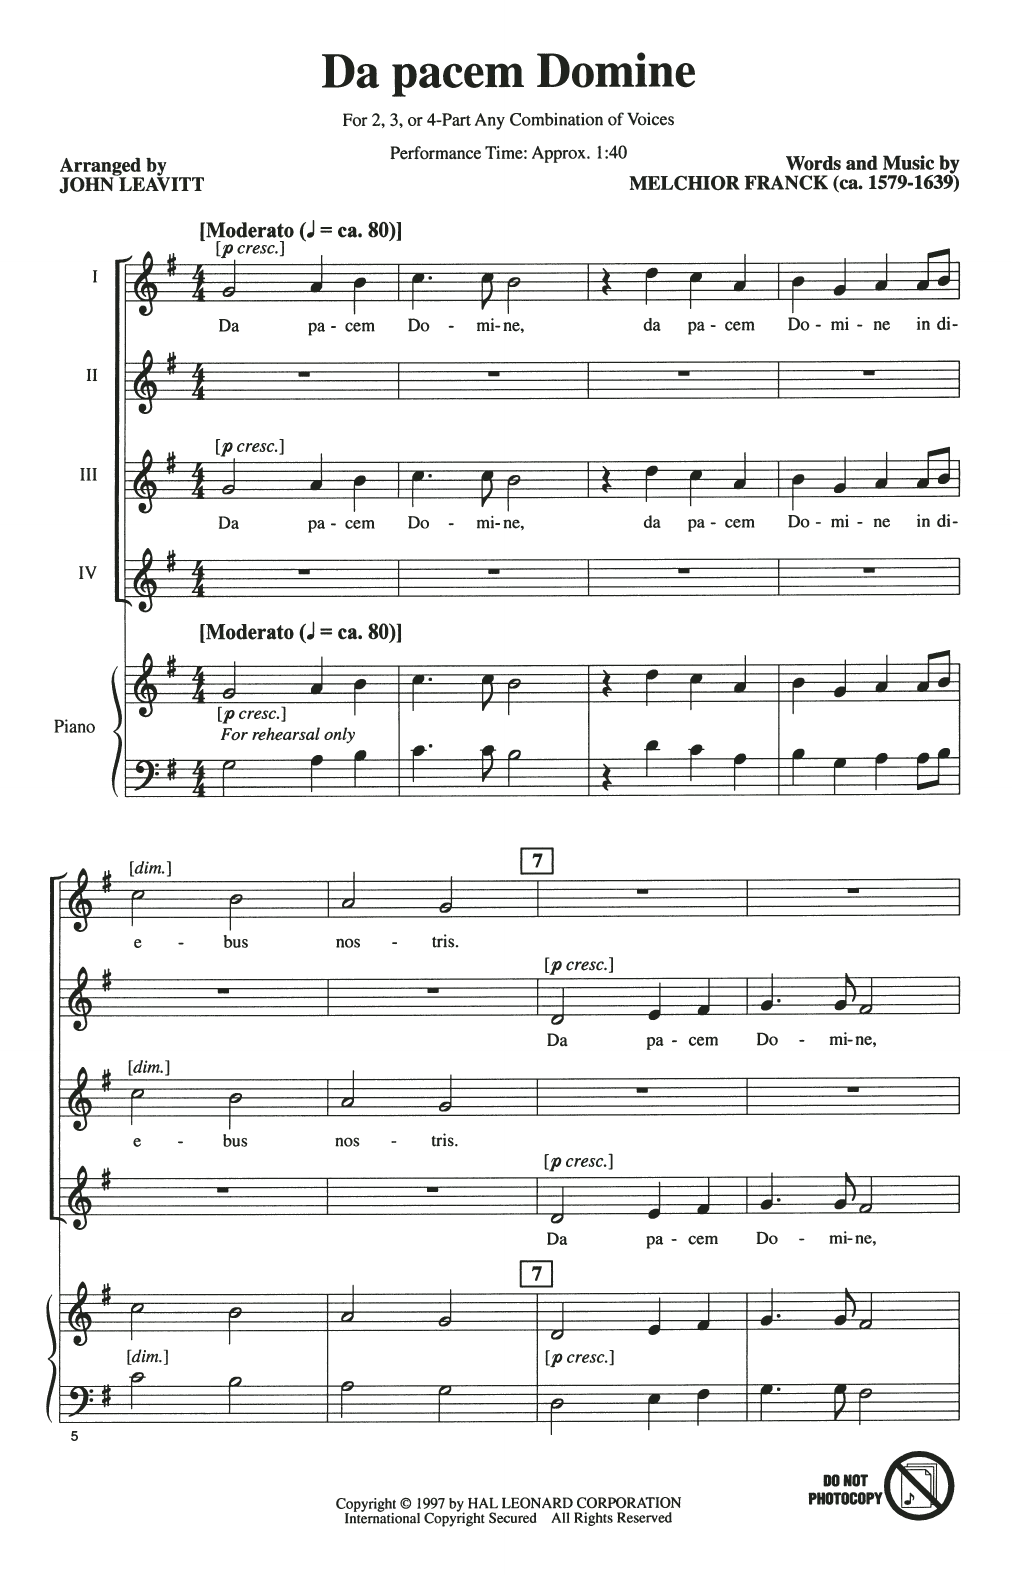 Melchior Franck Da Pacem Domine (arr. John Leavitt) Sheet Music Notes & Chords for 4-Part Choir - Download or Print PDF